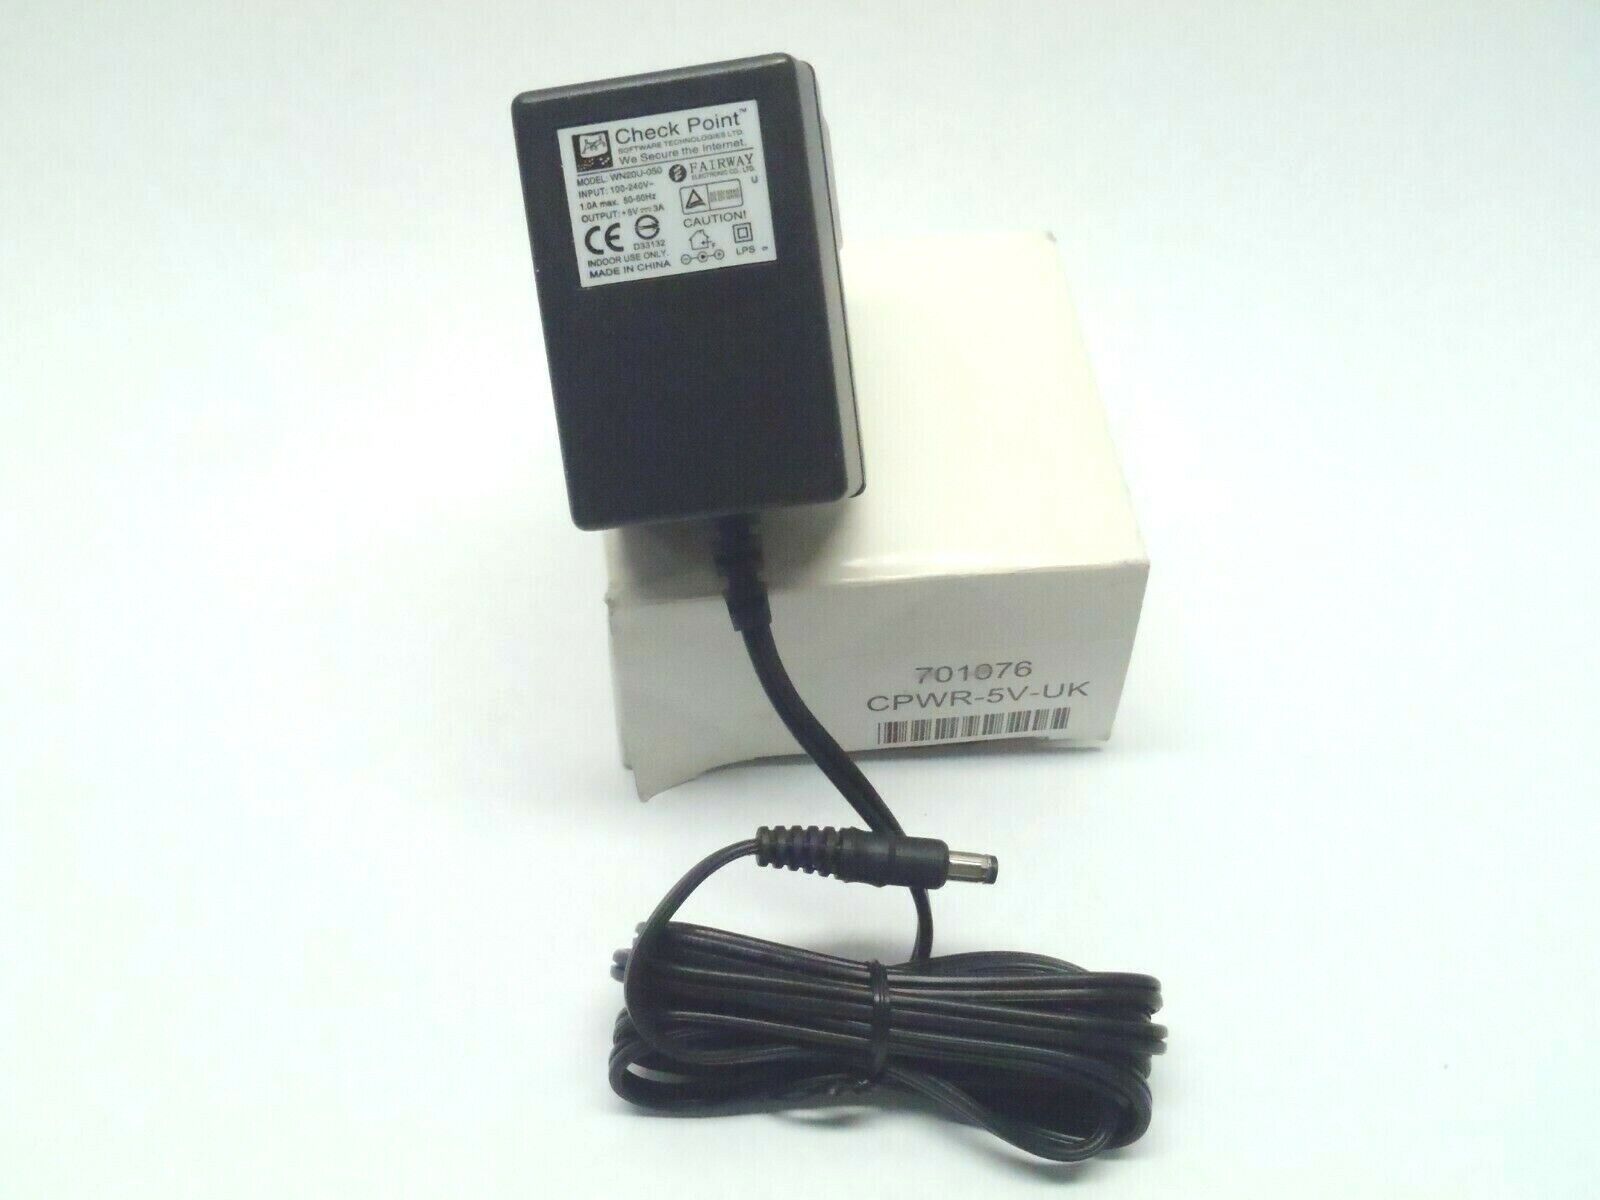 Fairway CPWR-5V-UK AC Adapter WN20U-050 Check Point Power Supply UK VERSION Model: Power Supply Type: AC/AC Adapter